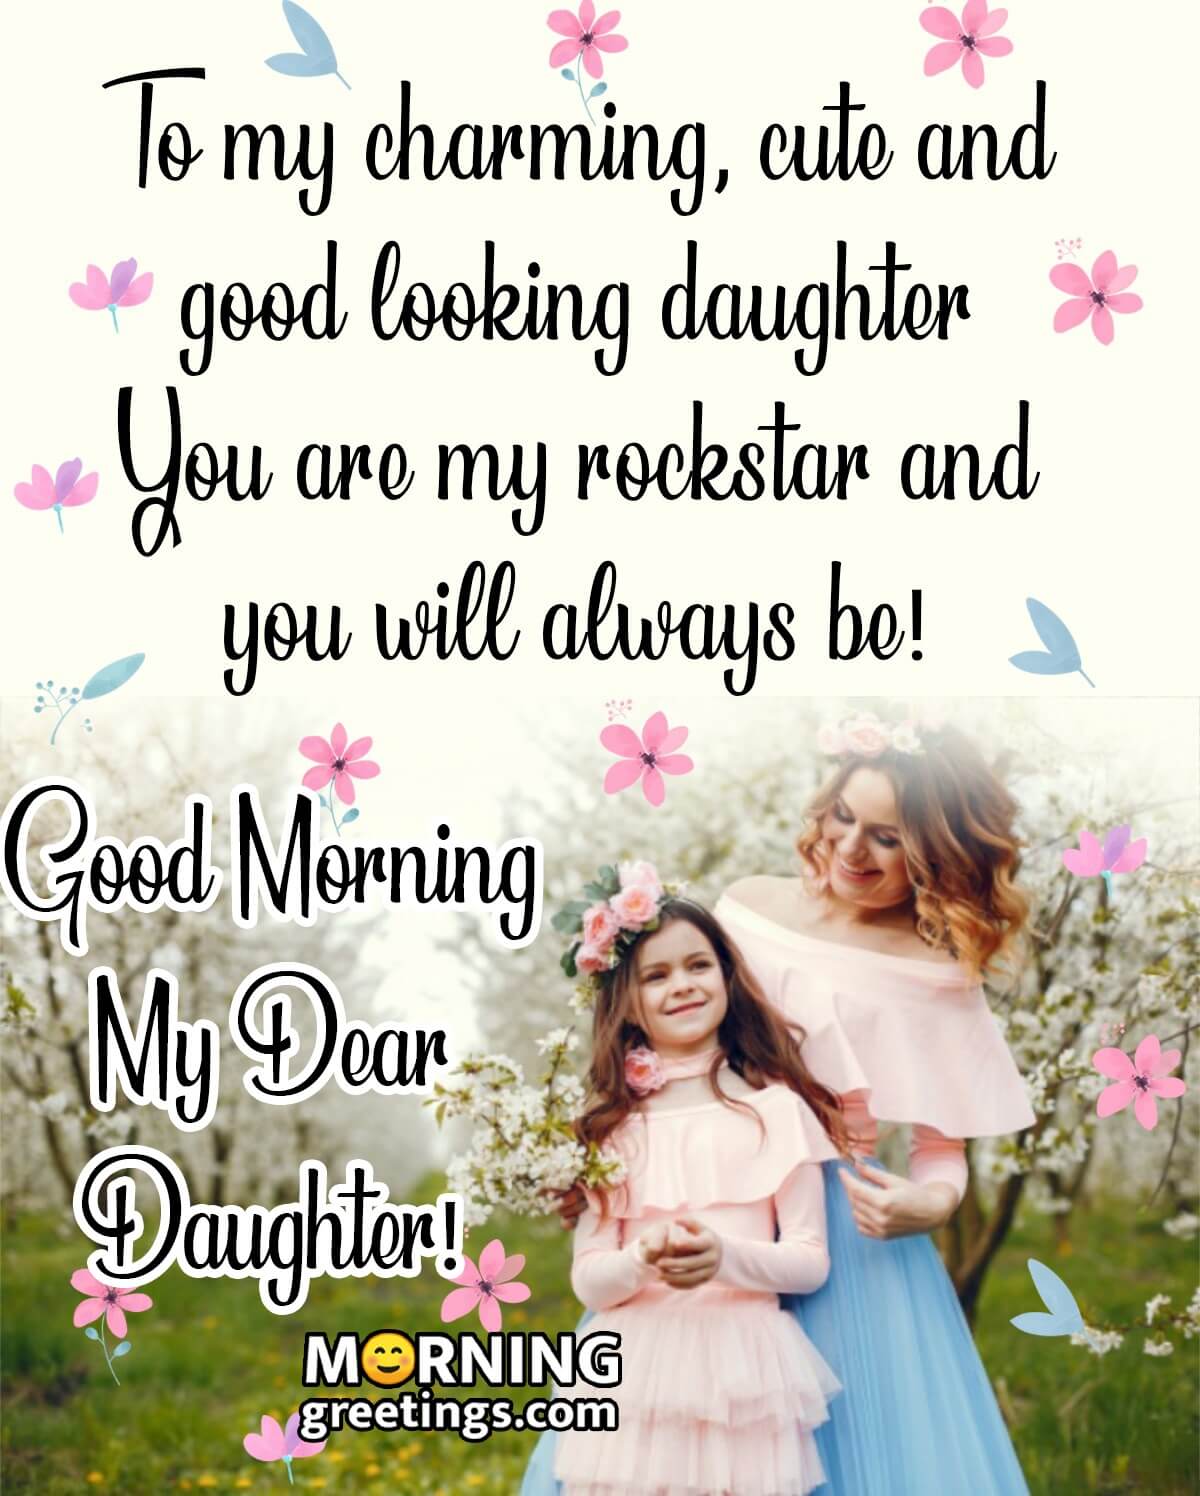 Good Morning My Charming Daughter